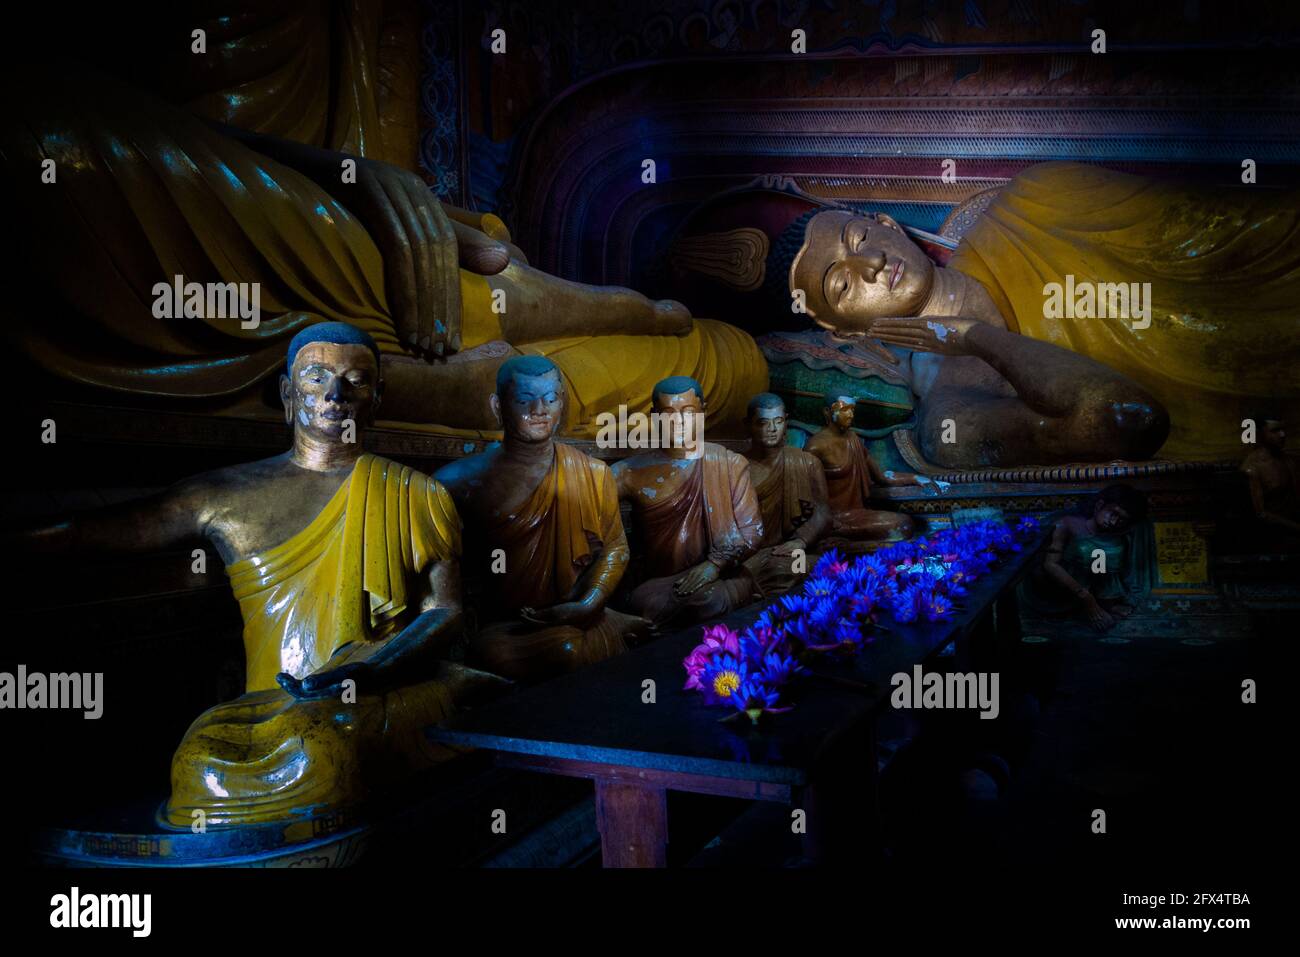 Dikwella, Wewurukannala Vihara Temple, Sri Lanka: interior room with small seated Buddhas Stock Photo